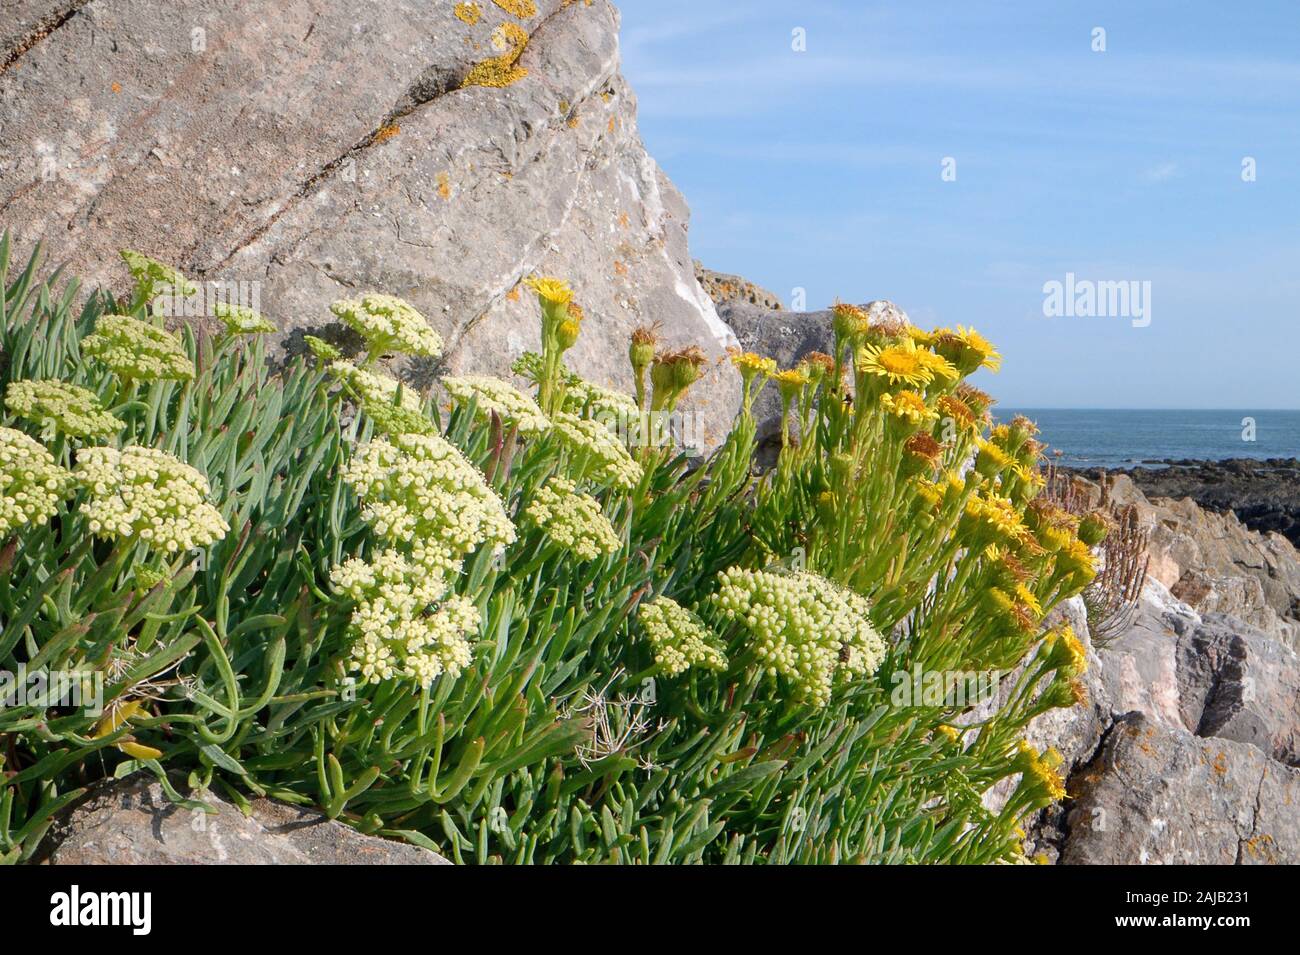 Rock samphire / Sea Fennel (Crithmum maritimum) and Golden samphire (Inula crithmoides) clumps flowering among coastal rocks, The Gower, Wales, UK. Stock Photo